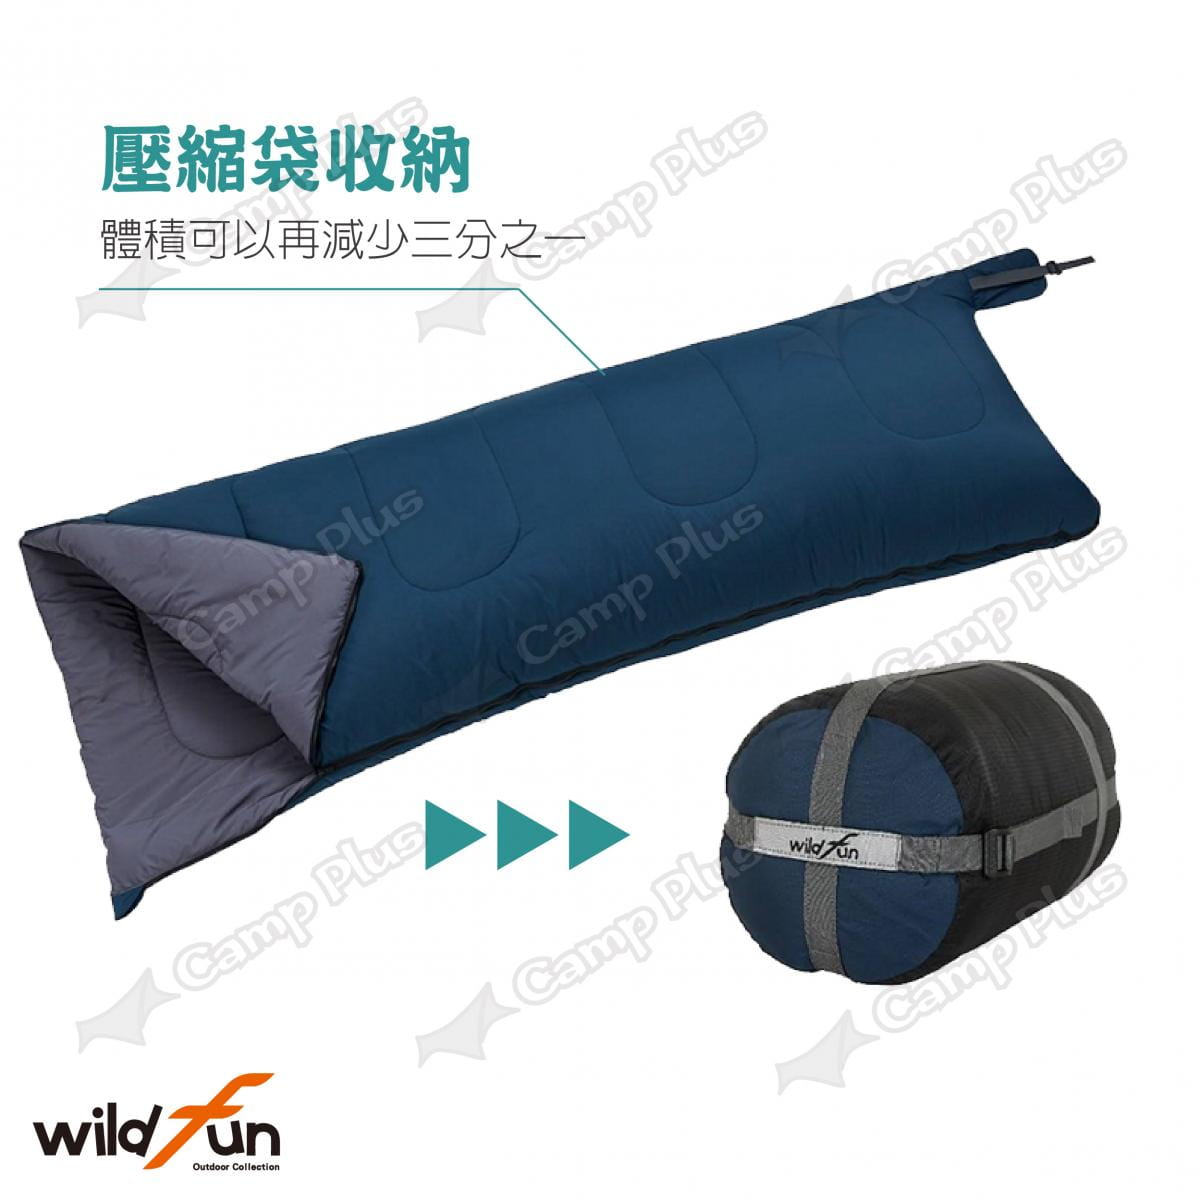 【Wildfun 野放】輕巧舒適方型睡袋 (悠遊戶外) 2